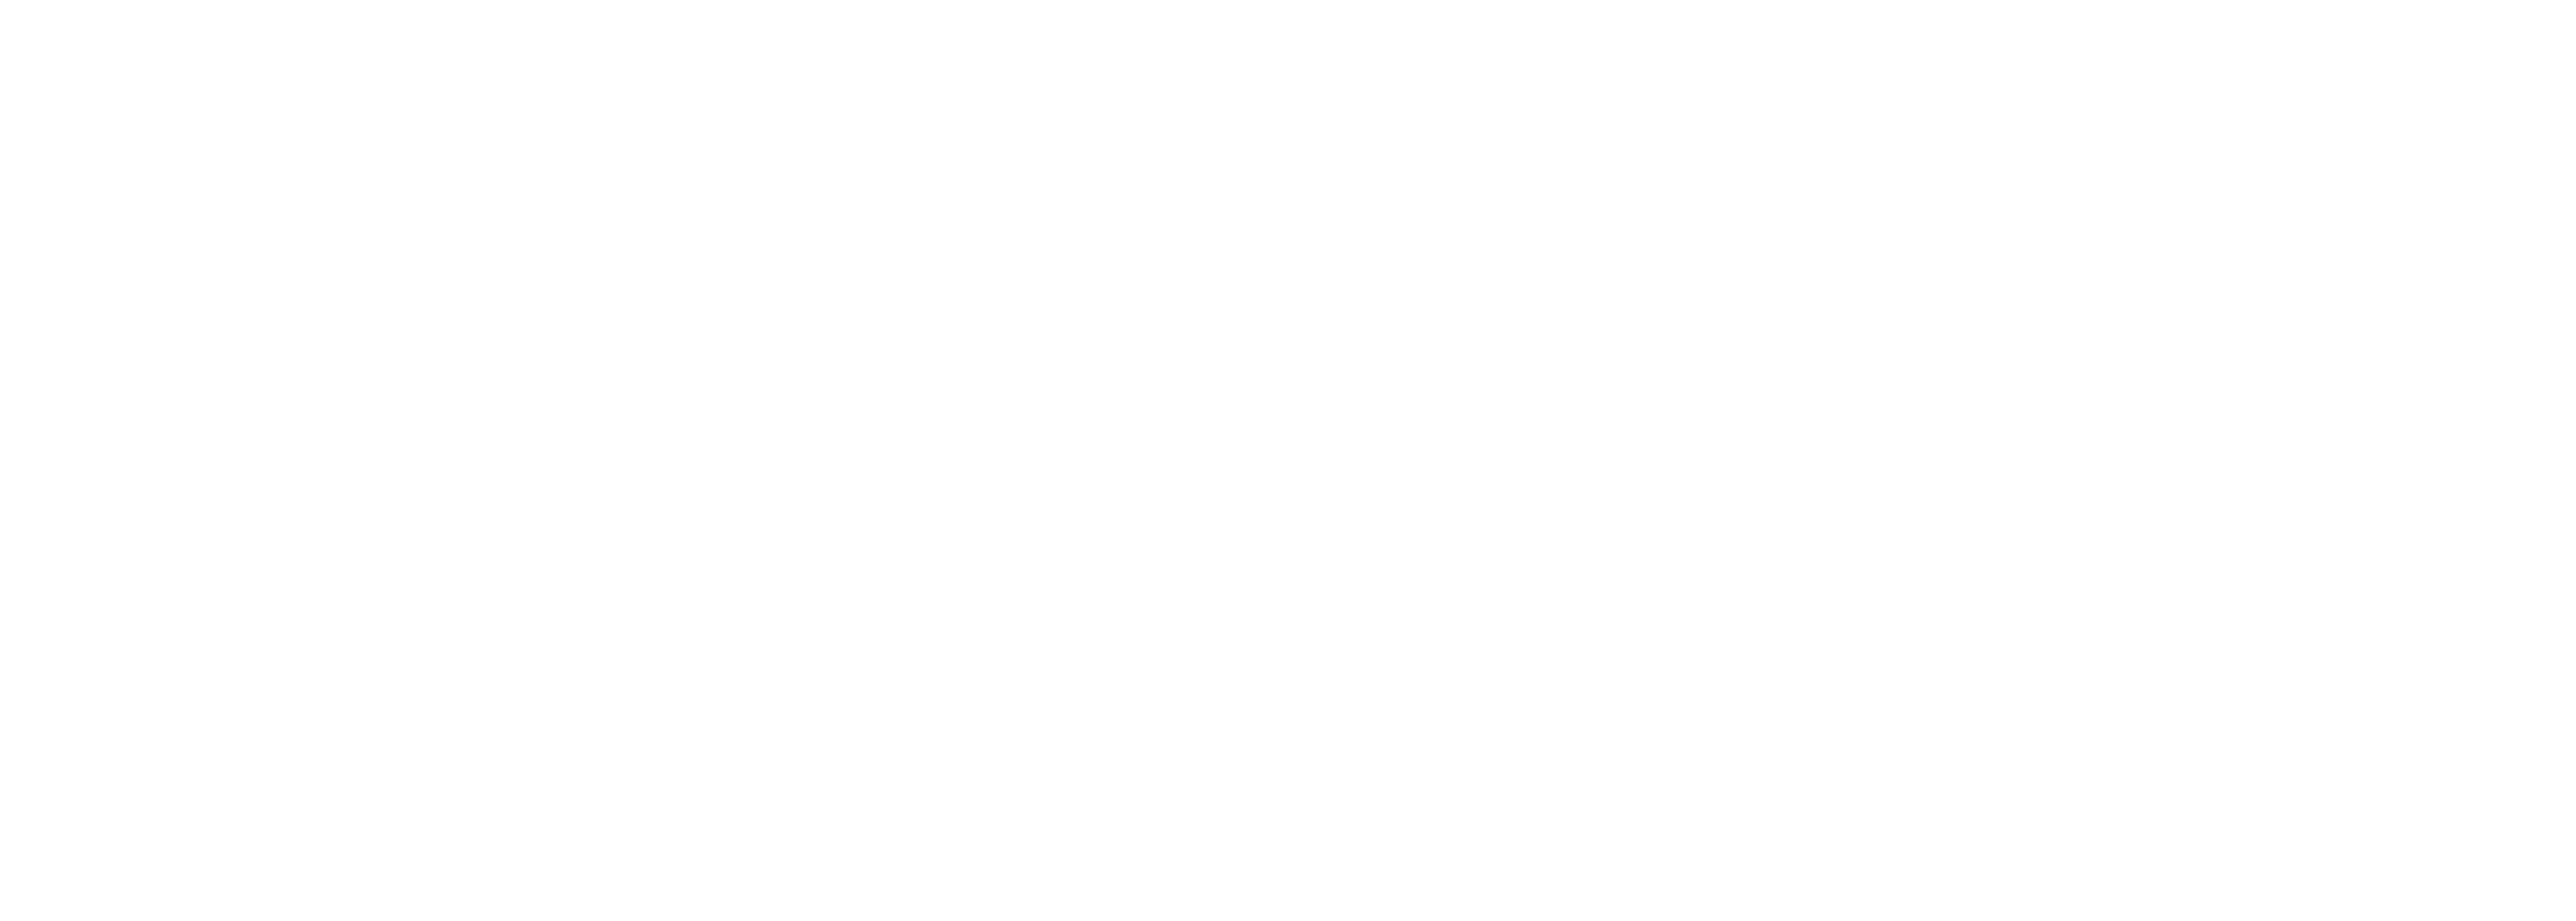 001-merken/texeler/001-logos/texeler-text--sheep-logo.png